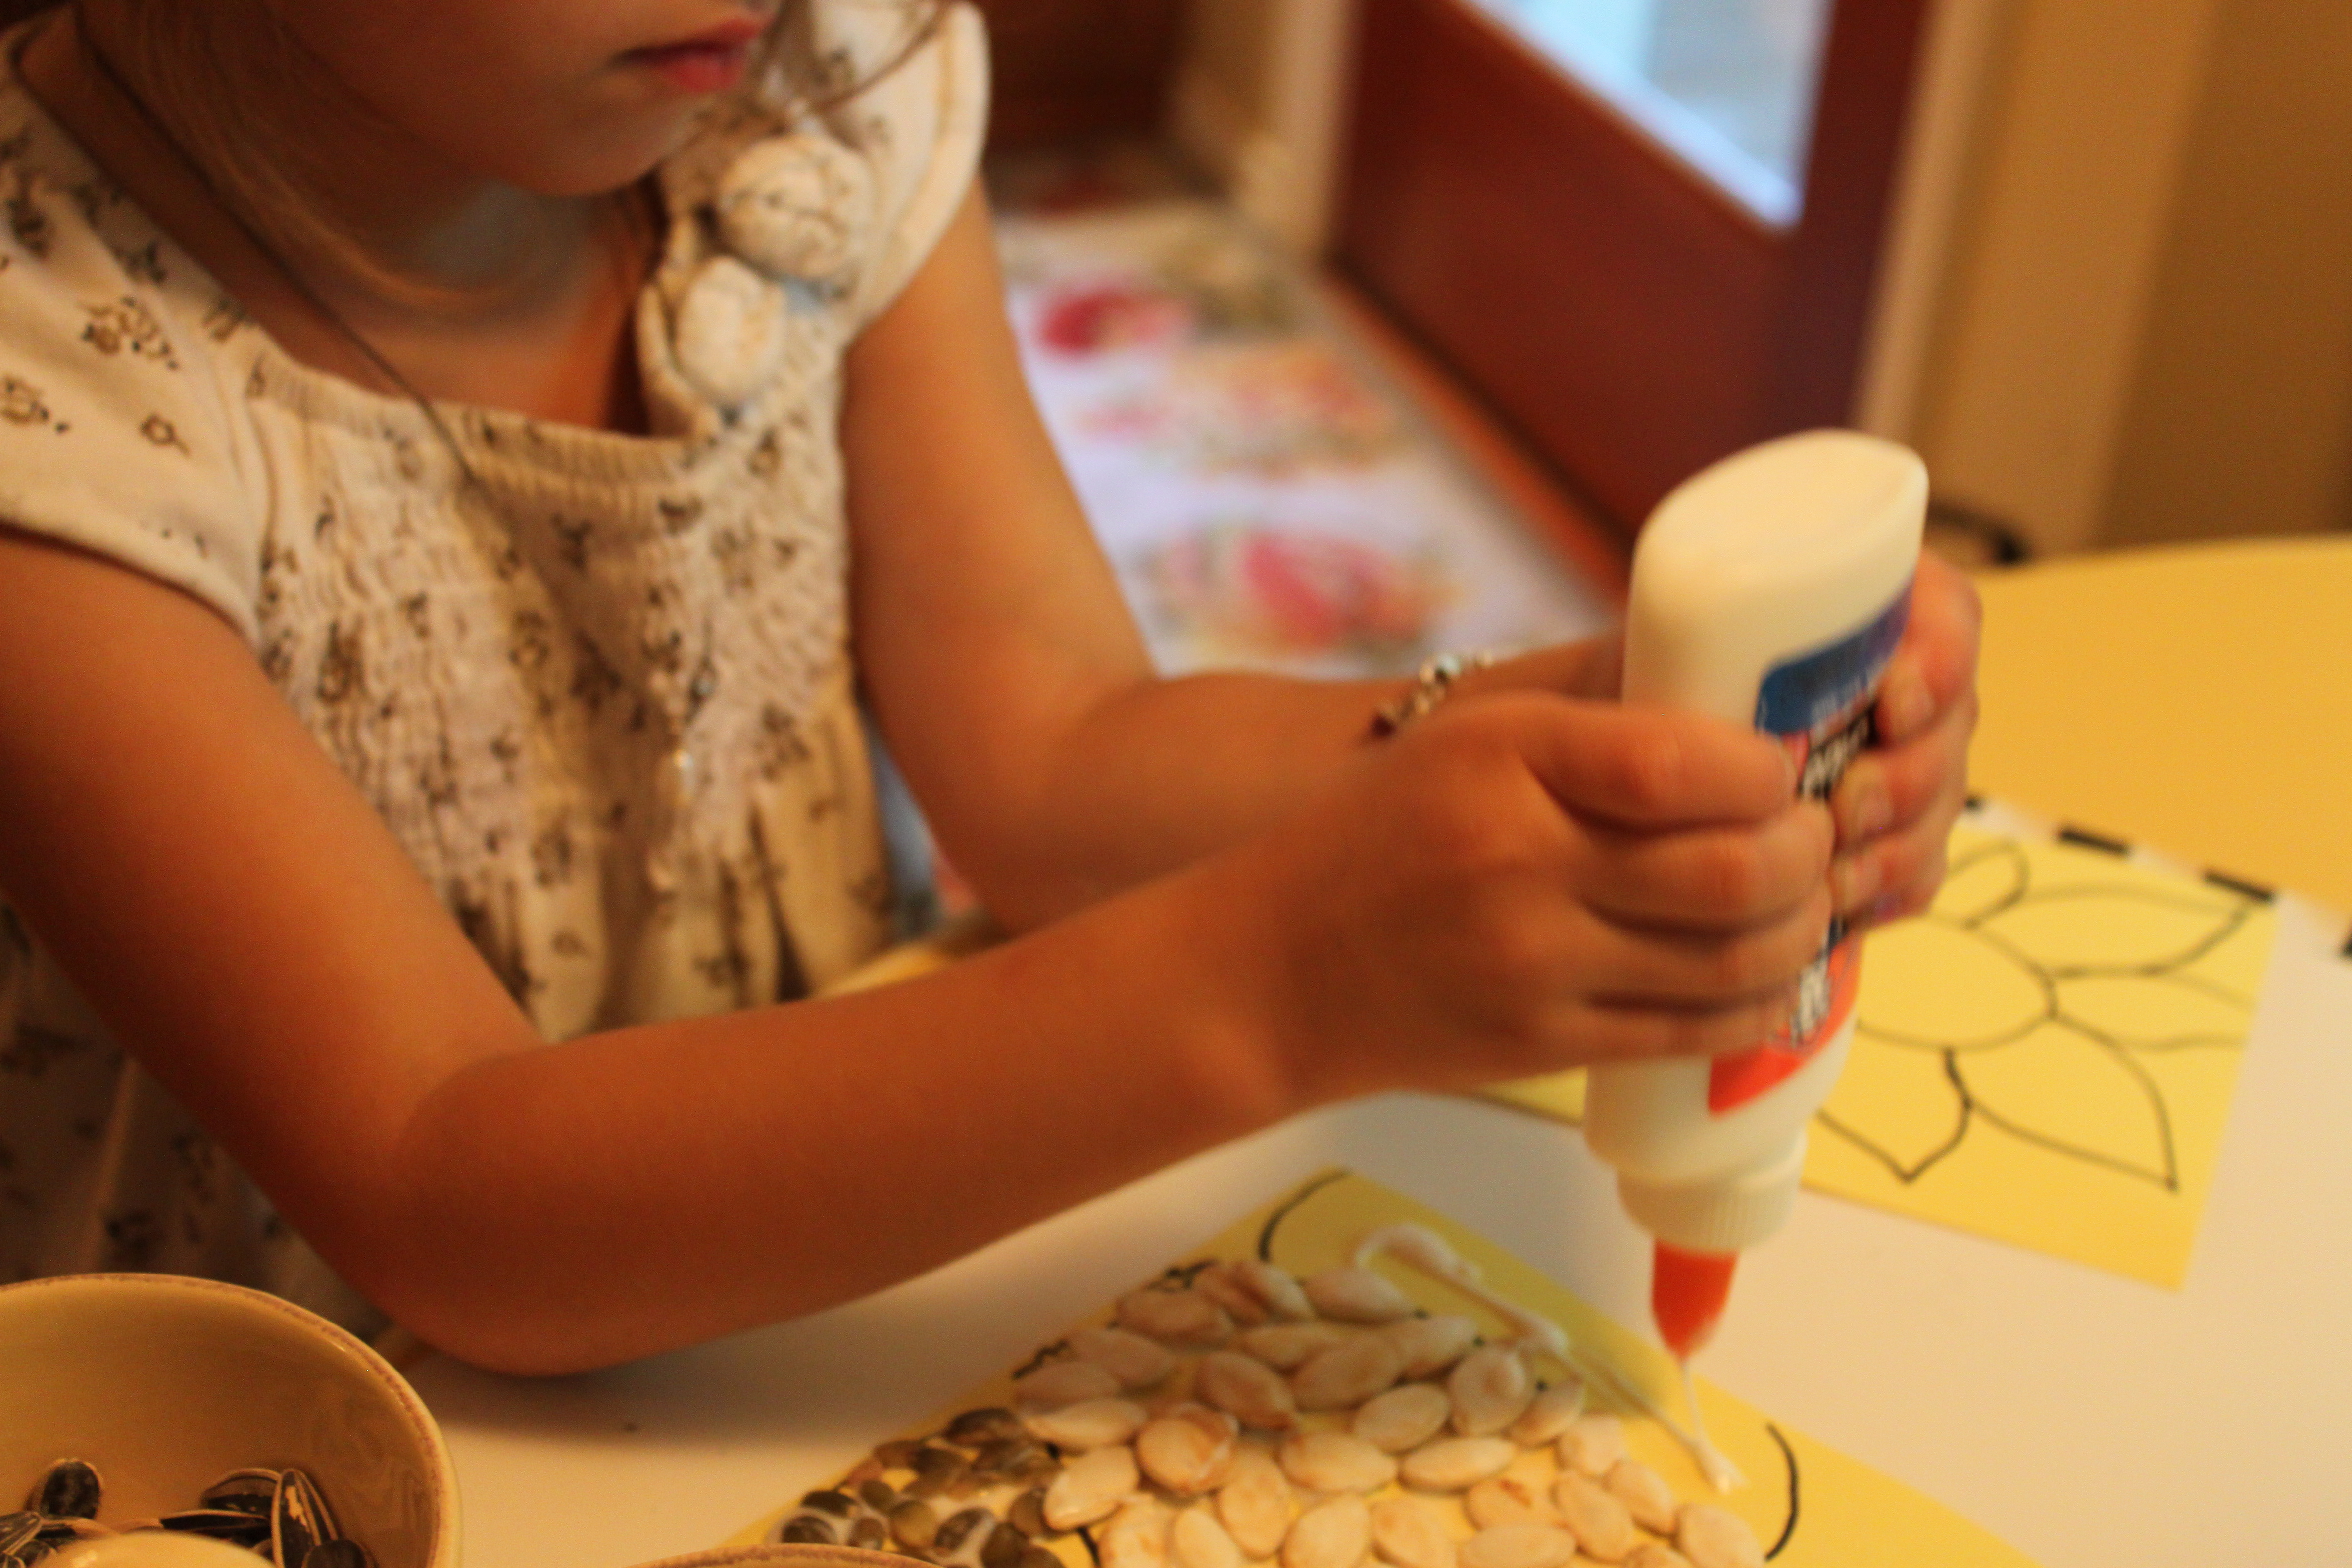  WEBEEDY DIY Pumpkin Mosaic Kits for Kids Crystal